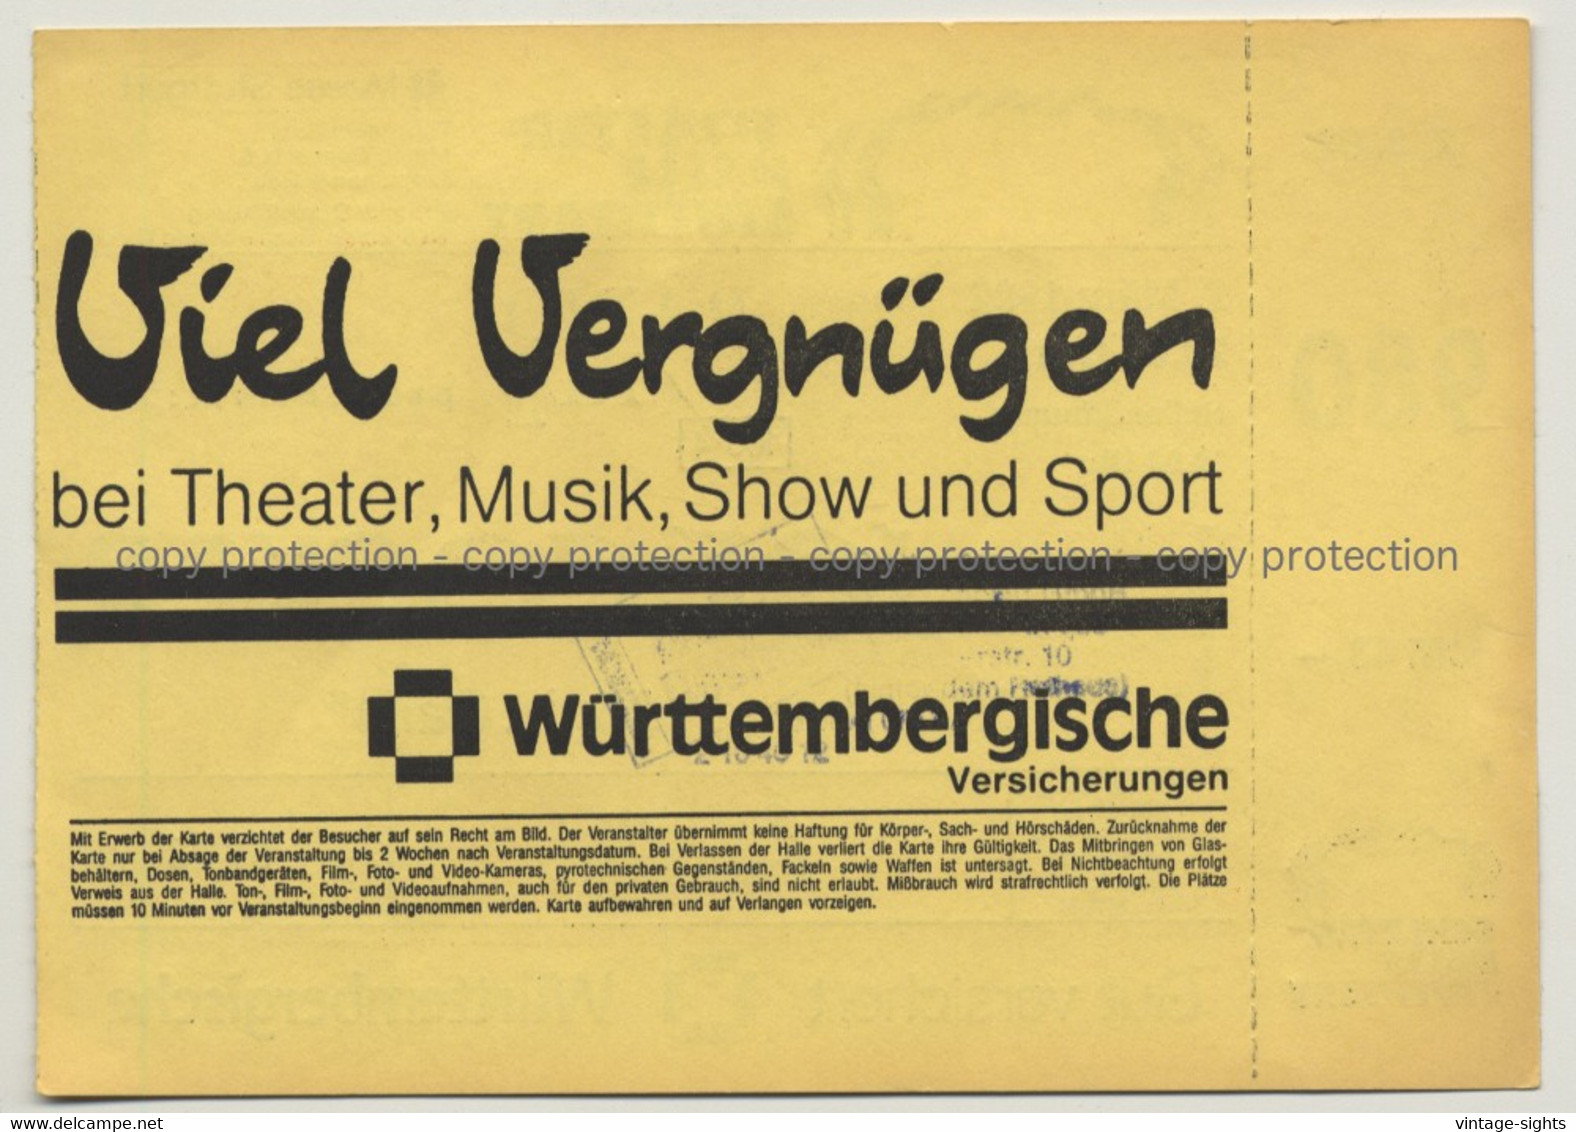 Joe Cocker - Night Calls Tour '92 Ticket N° 5723 Stuttgart - Unused (Vintage Memorabilia) - Concerttickets